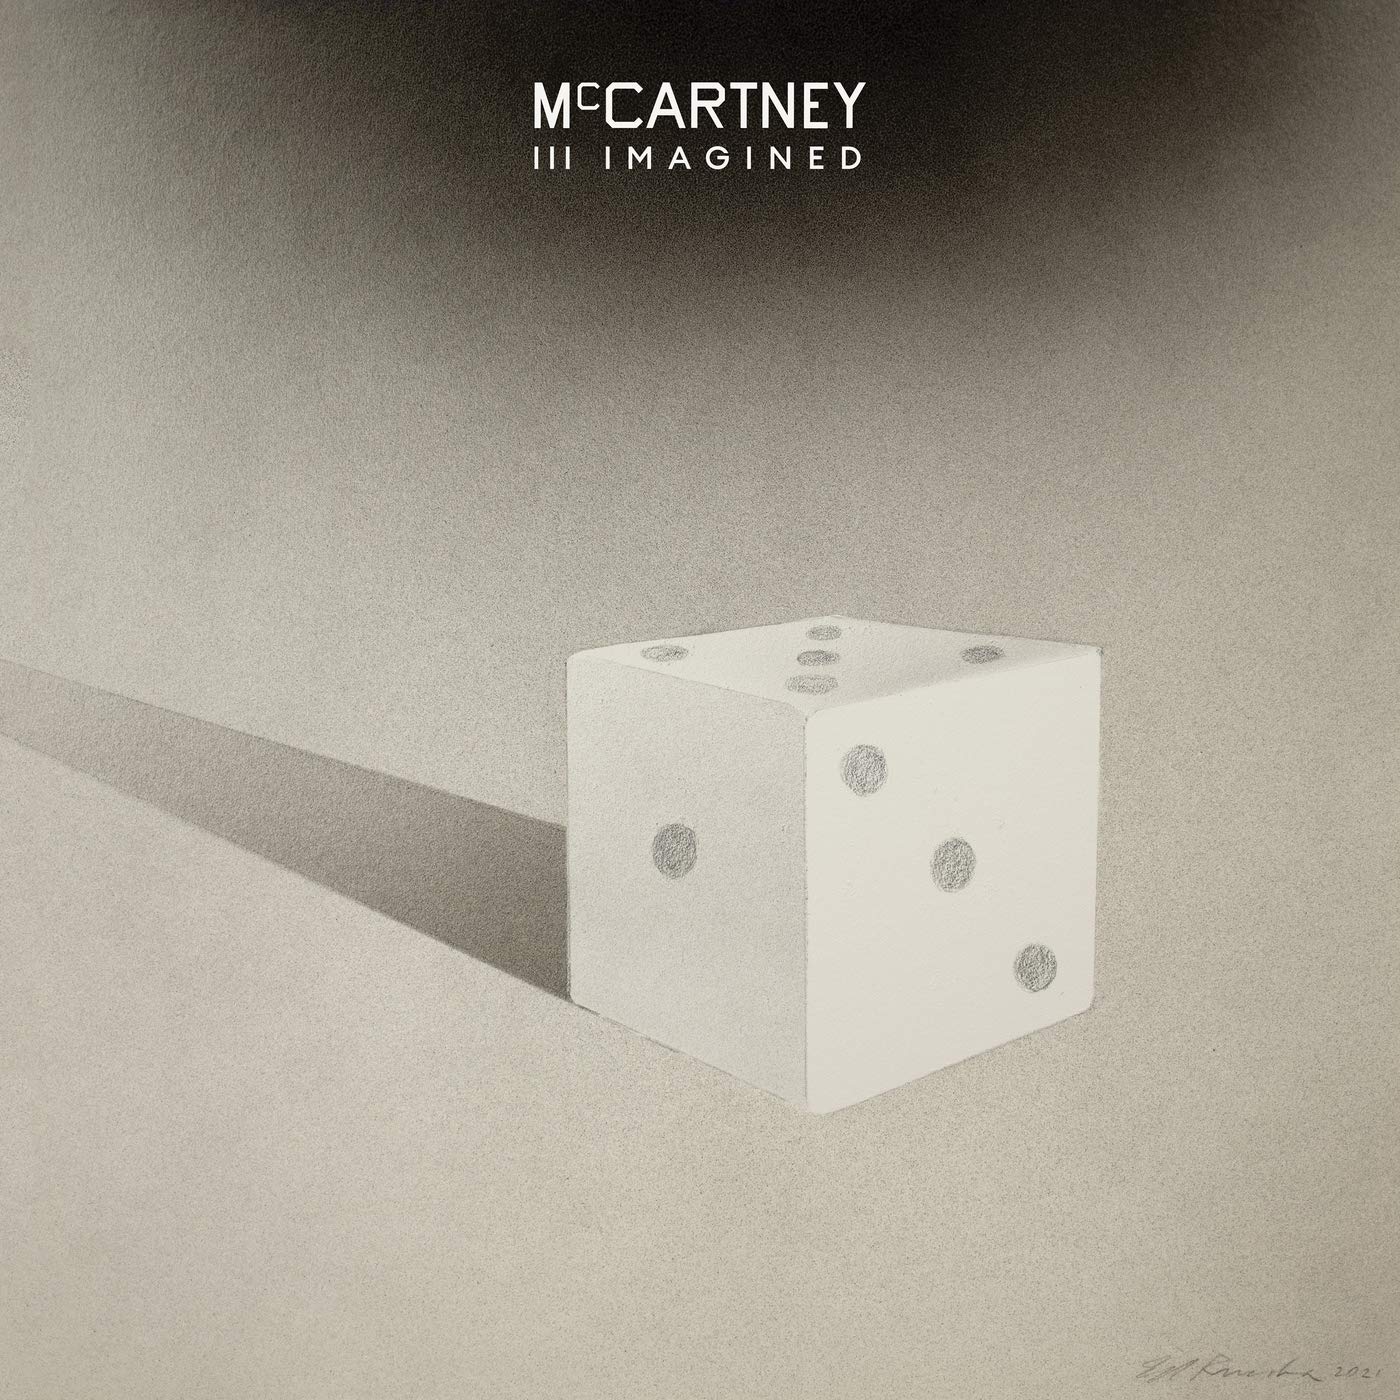 Vinyl-LP Paul Mc Cartney-Imagined III